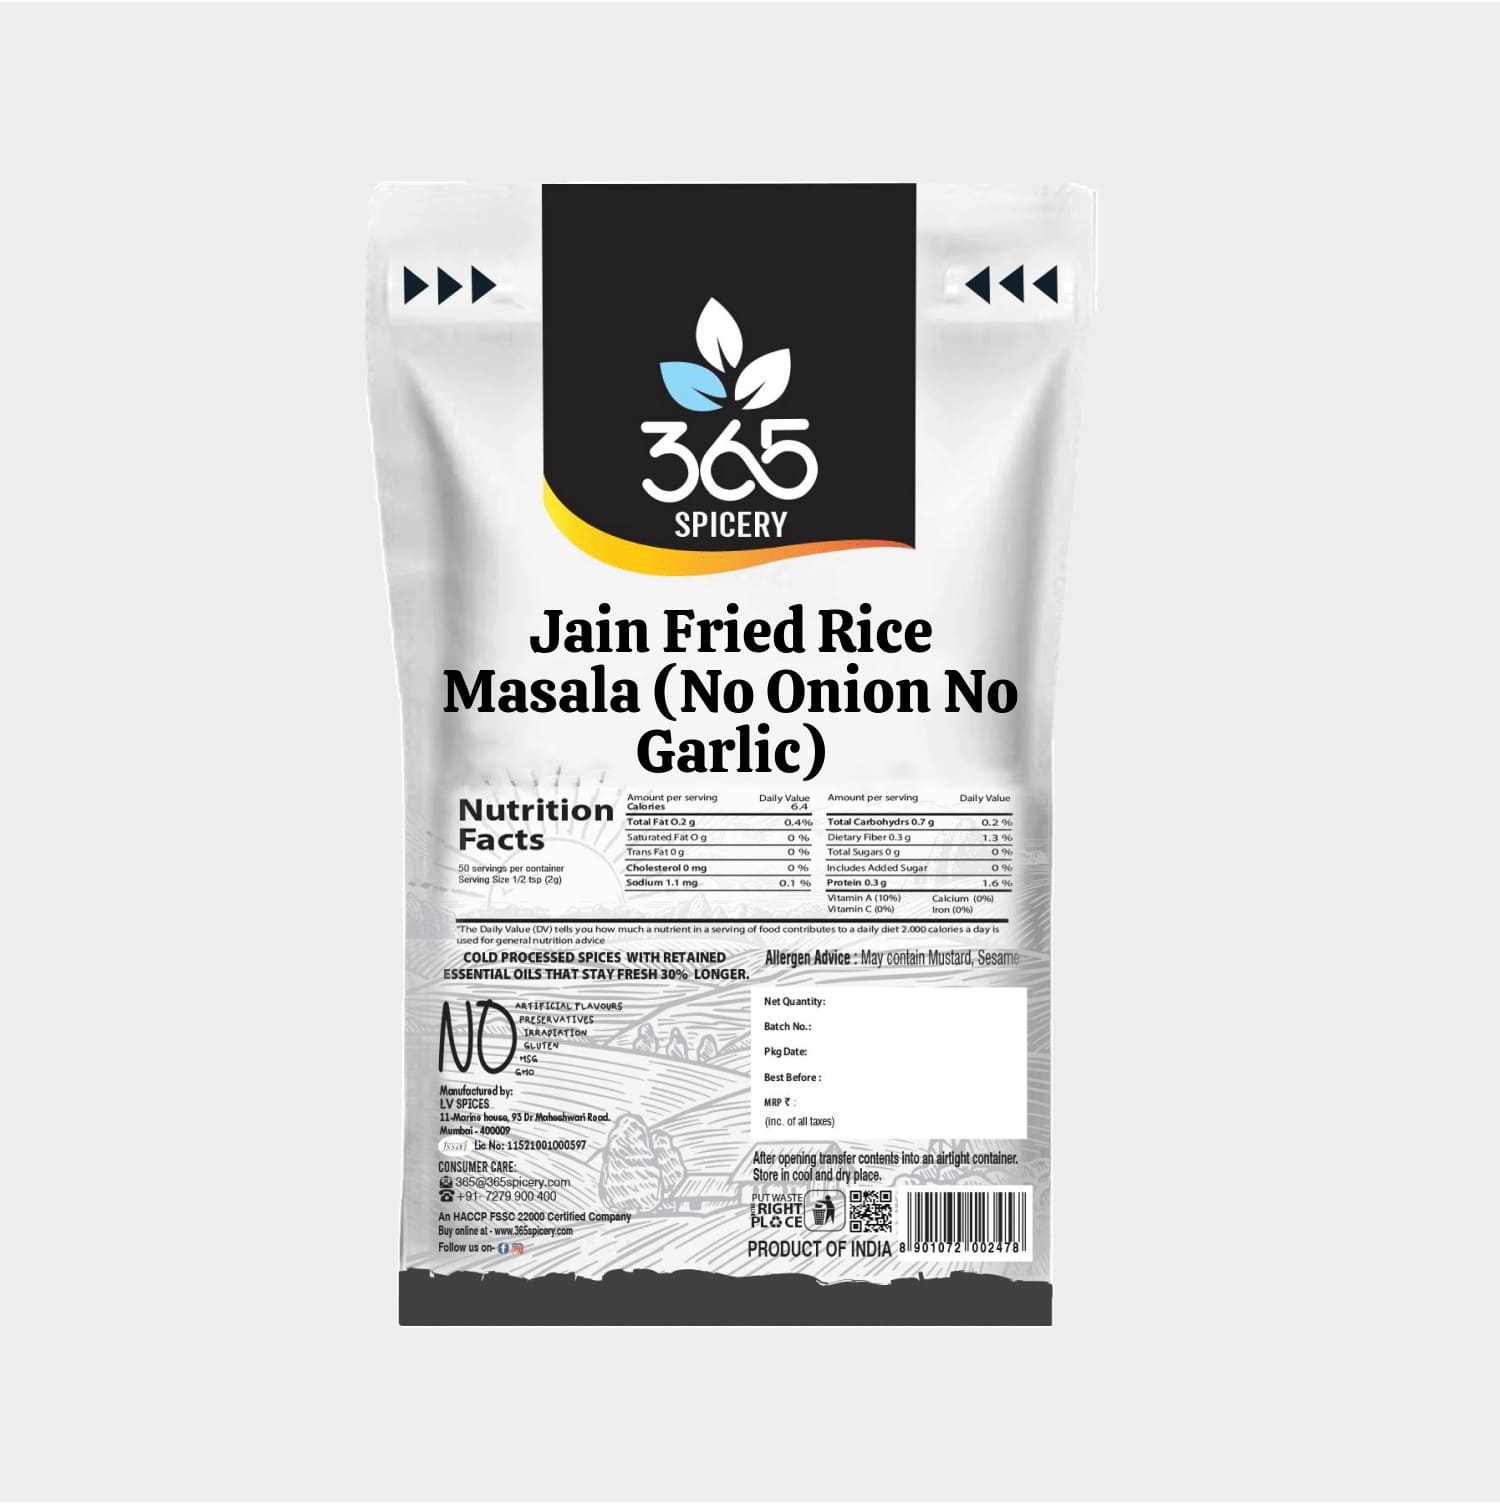 Jain Fried Rice Masala (No Onion No Garlic)